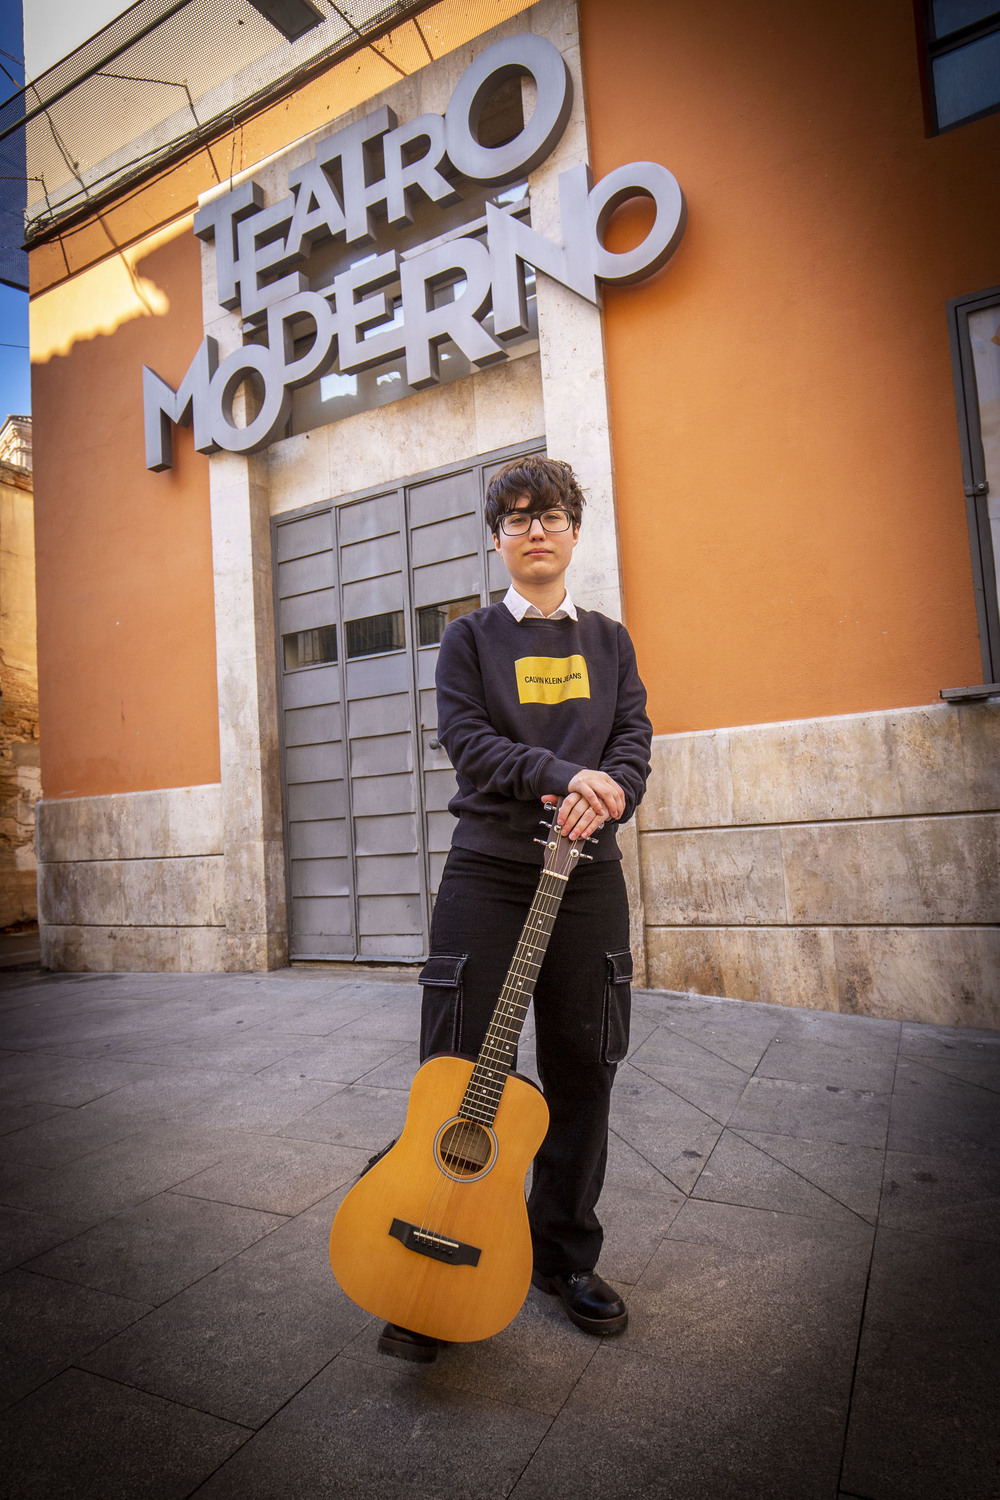 Itziar Gregorio actuó este fin de semana dentro del festival Moderno Sonoro.